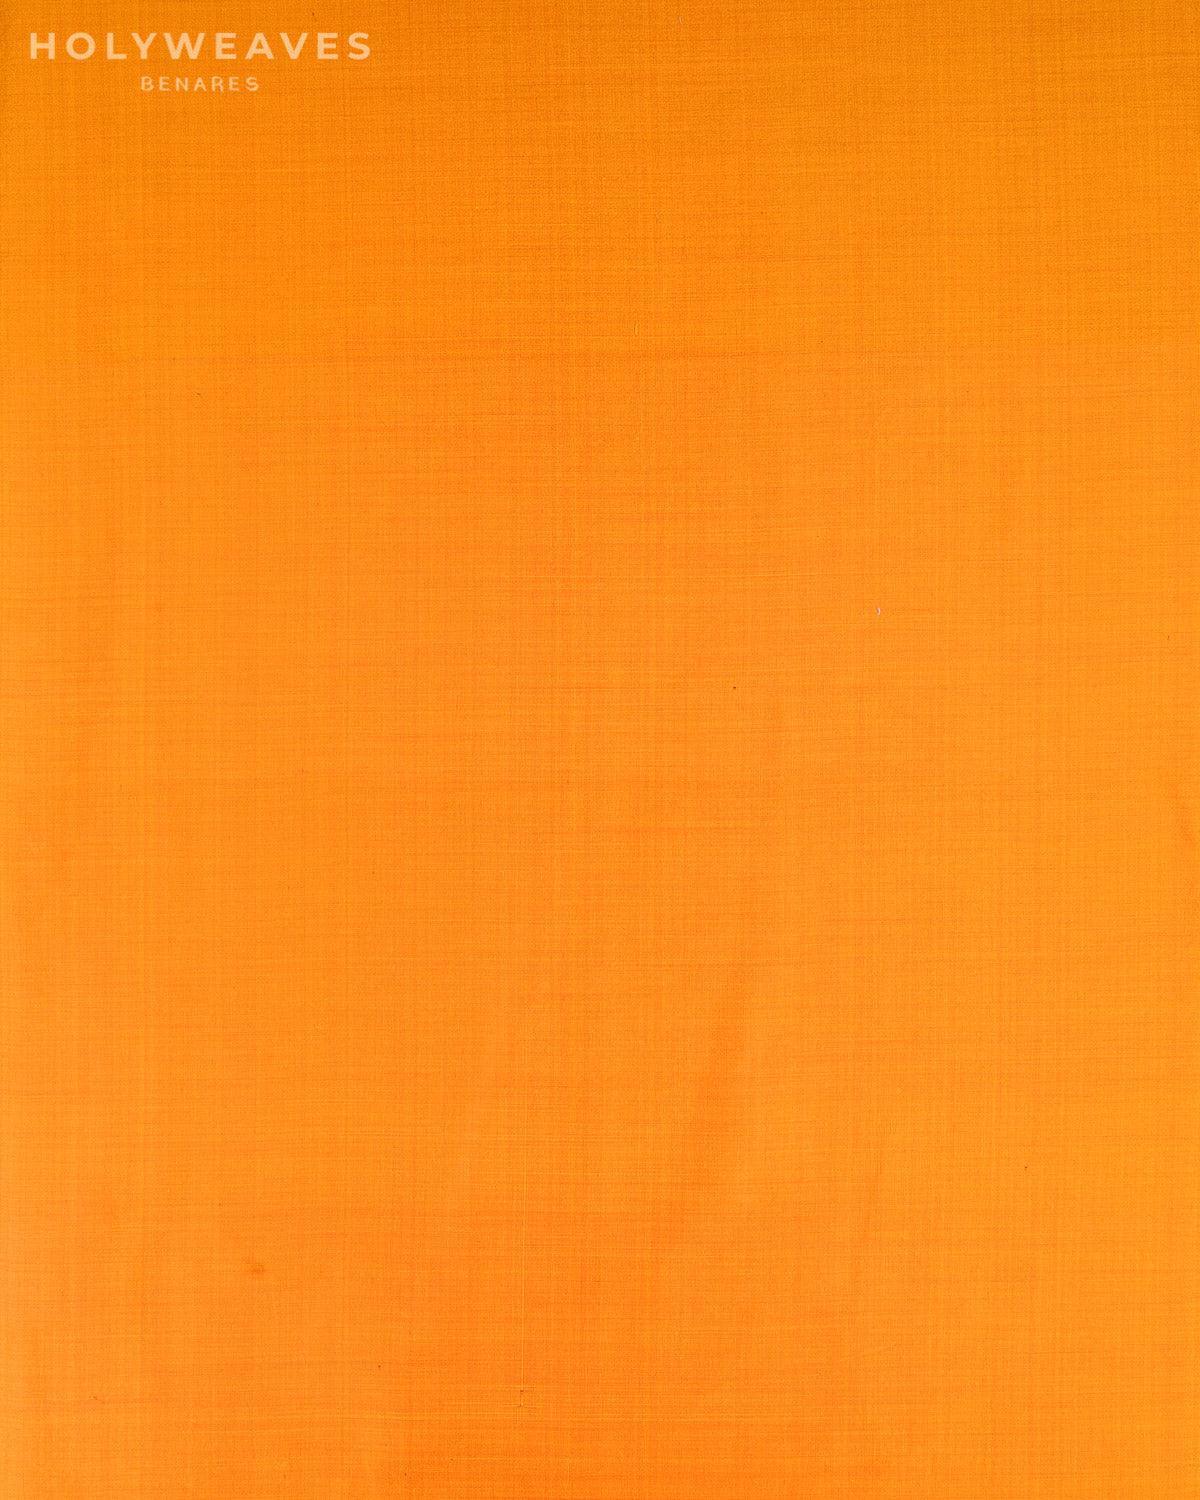 Sunny Orange Banarasi Plain Woven Spun Silk Fabric - By HolyWeaves, Benares